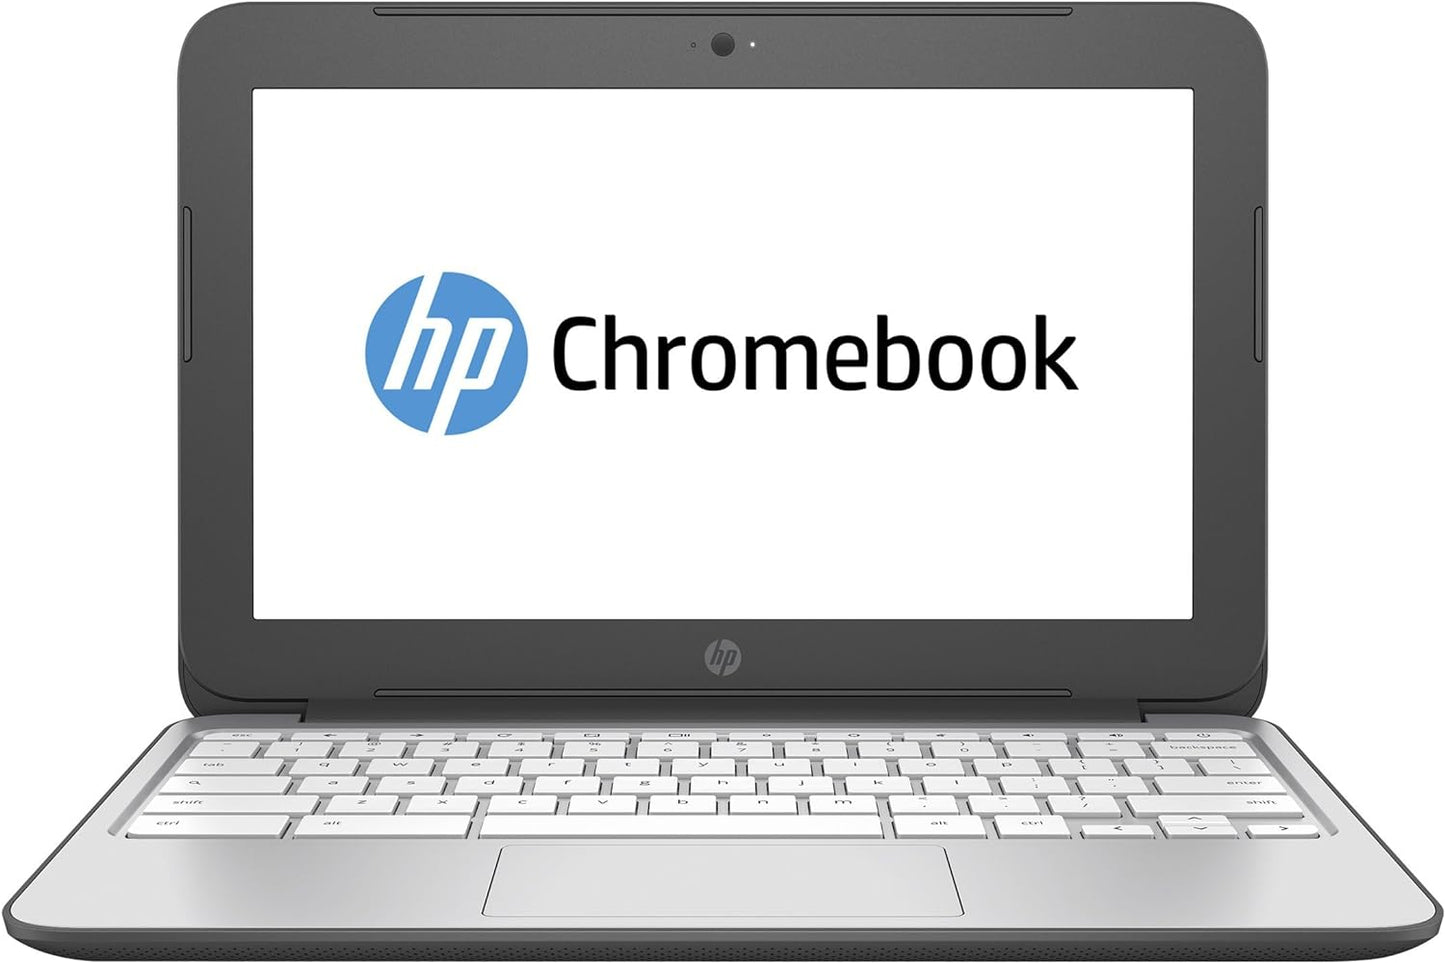 Refurbished HP 11.6" Chromebook - Intel Celeron N2840 CPU - 2GB RAM - 16GB Storage